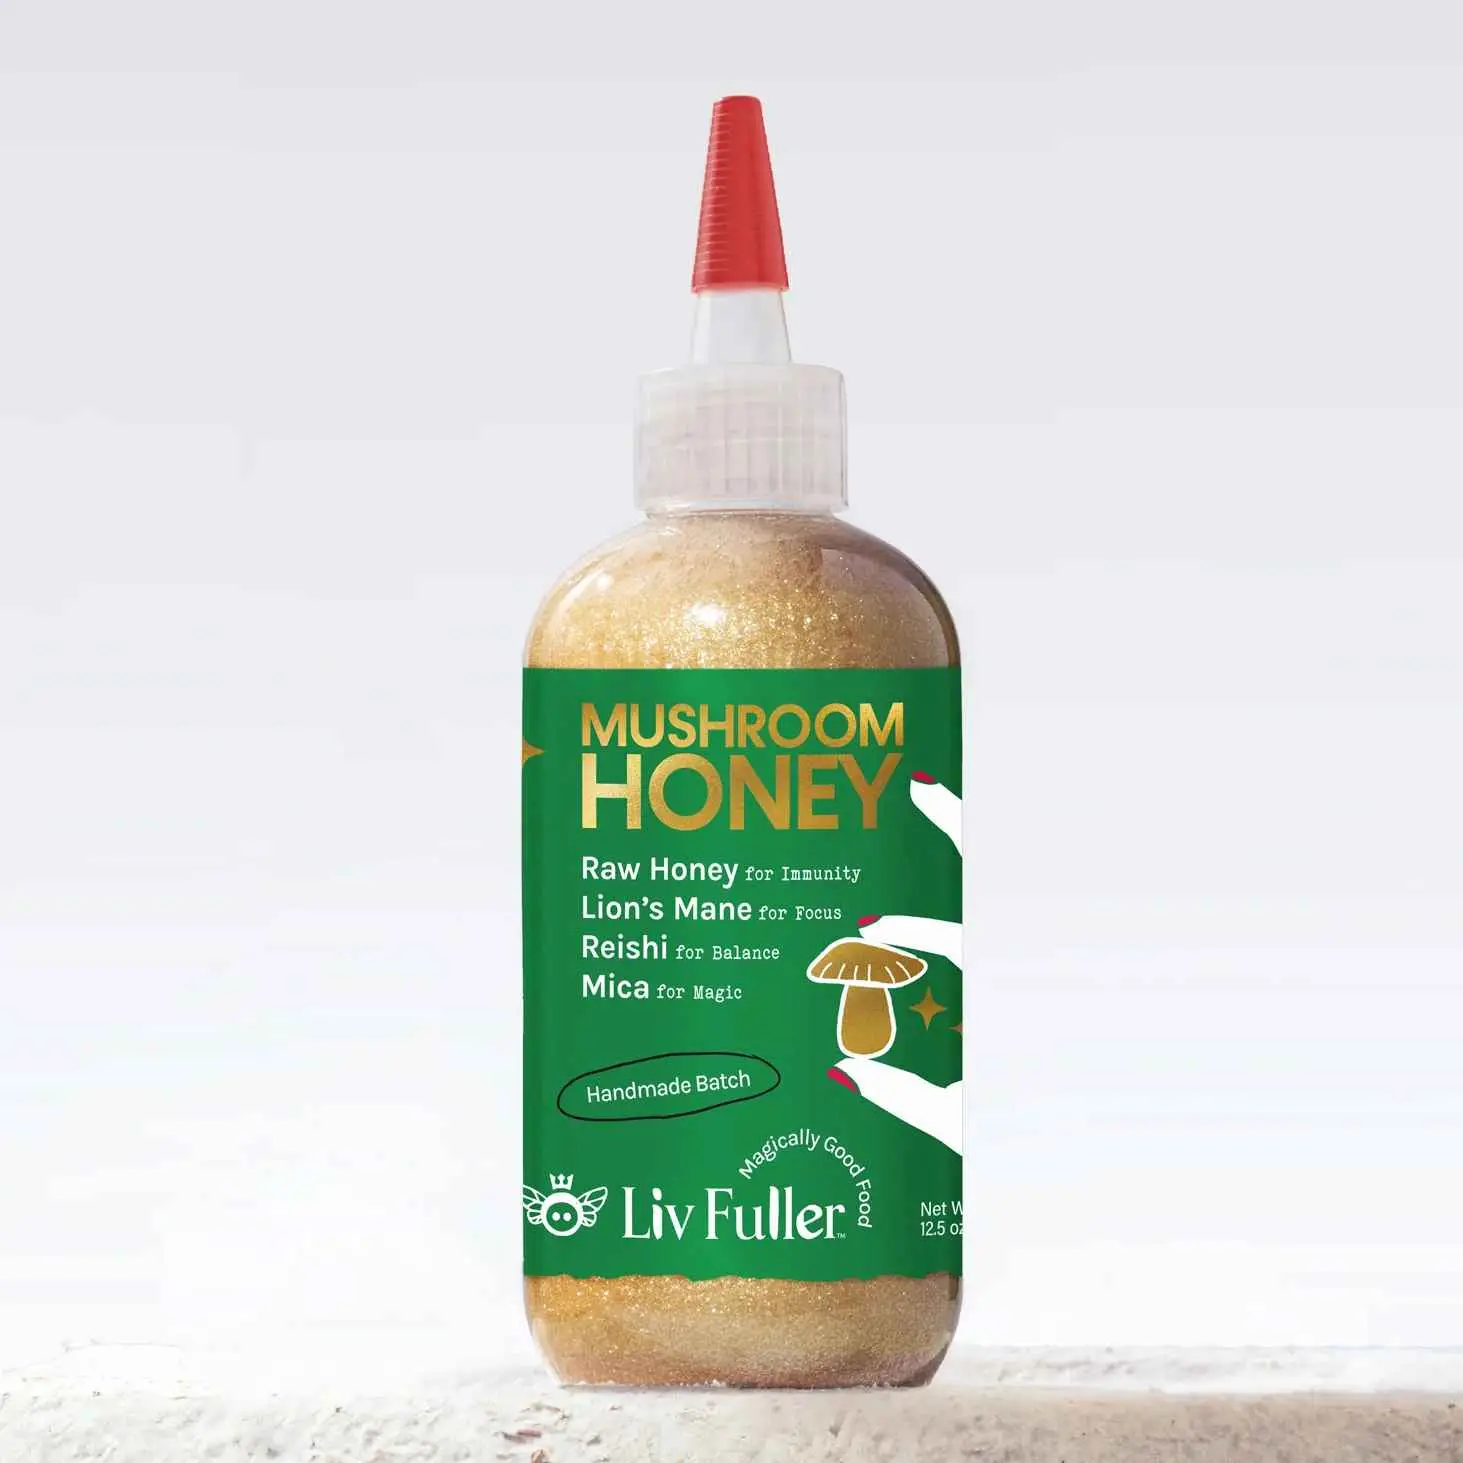 Sparkle Mushroom Honey Delivery